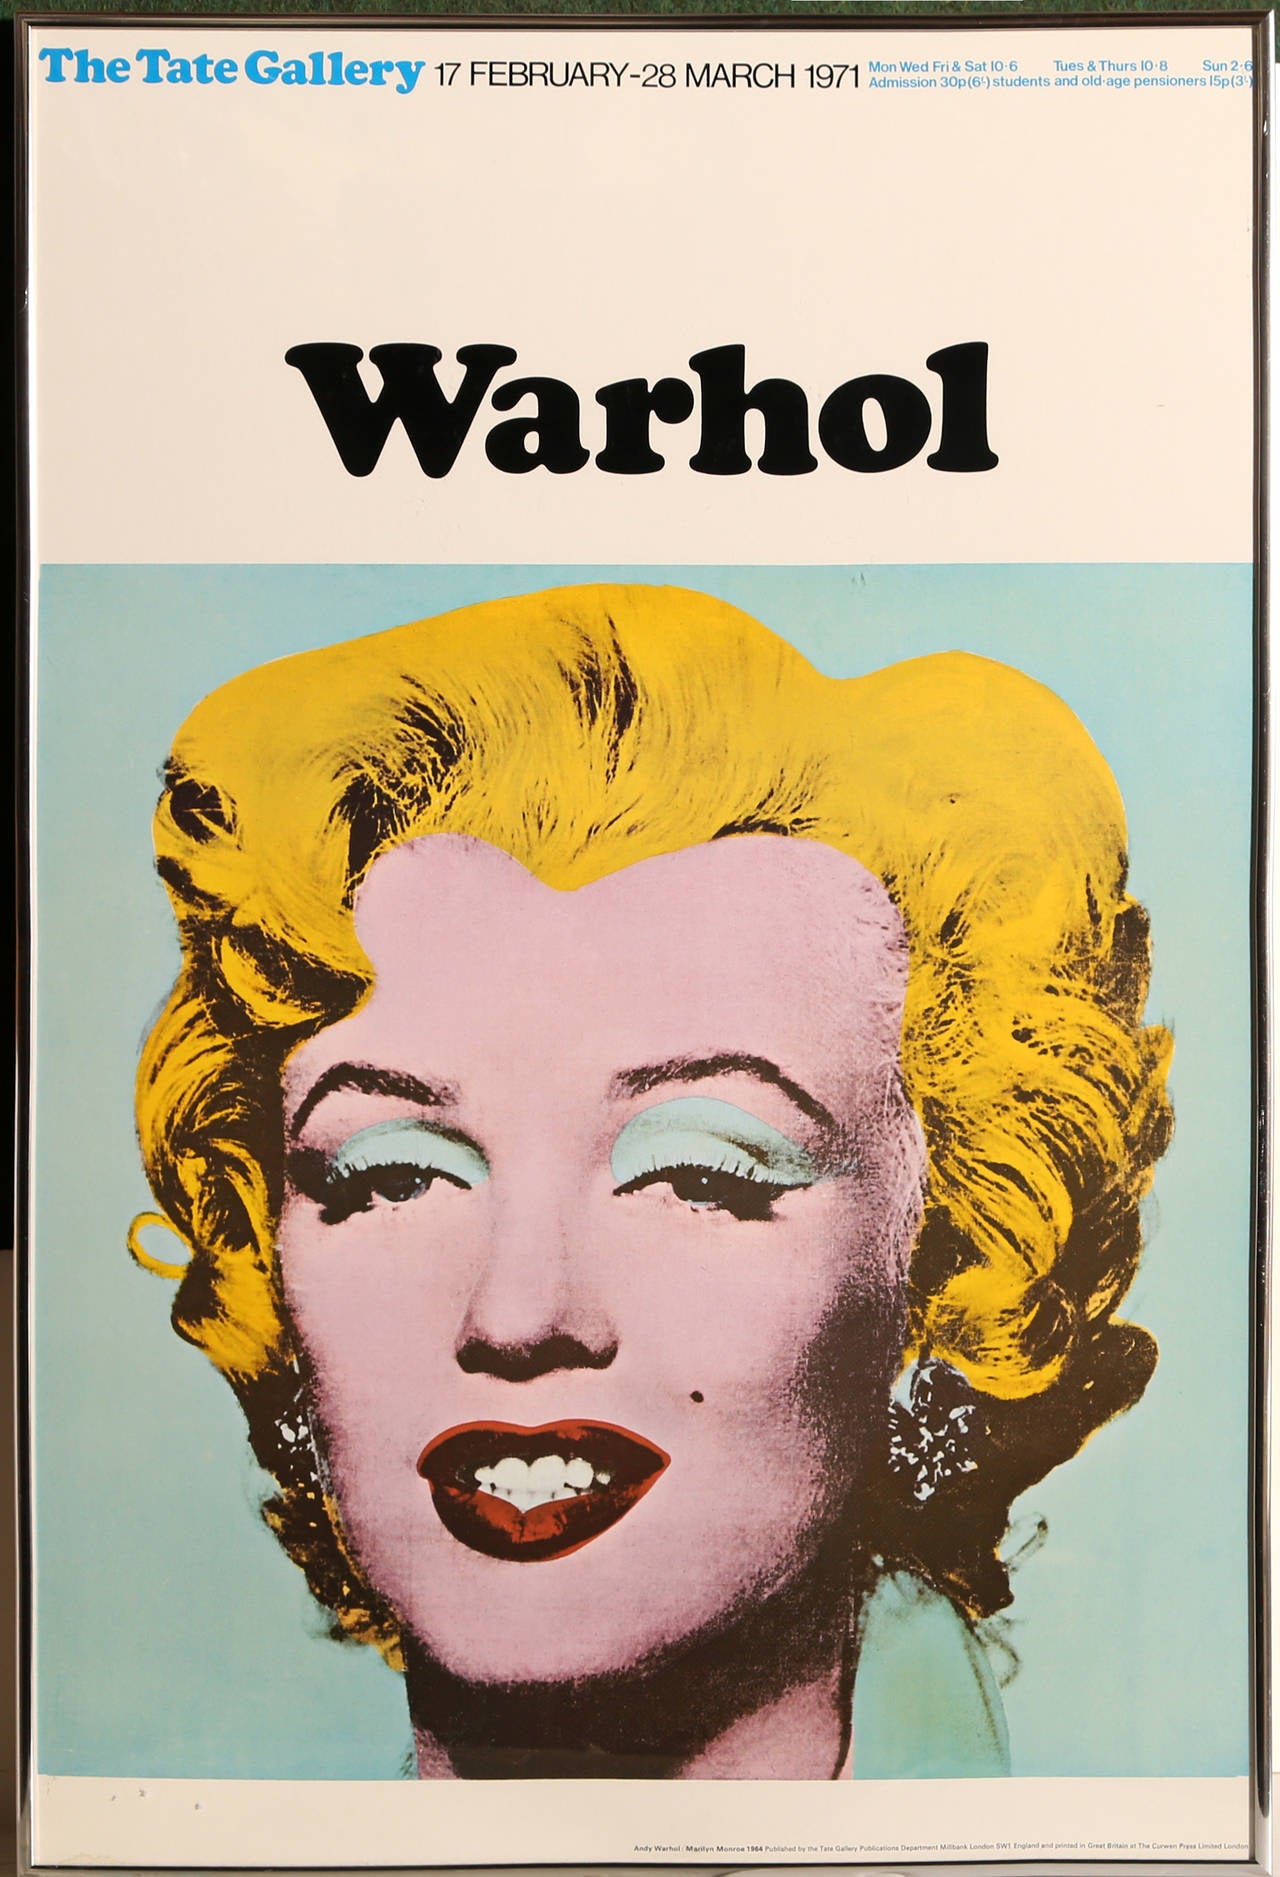 Andy Warhol Portrait Print - Marilyn Monroe - Tate Gallery, London